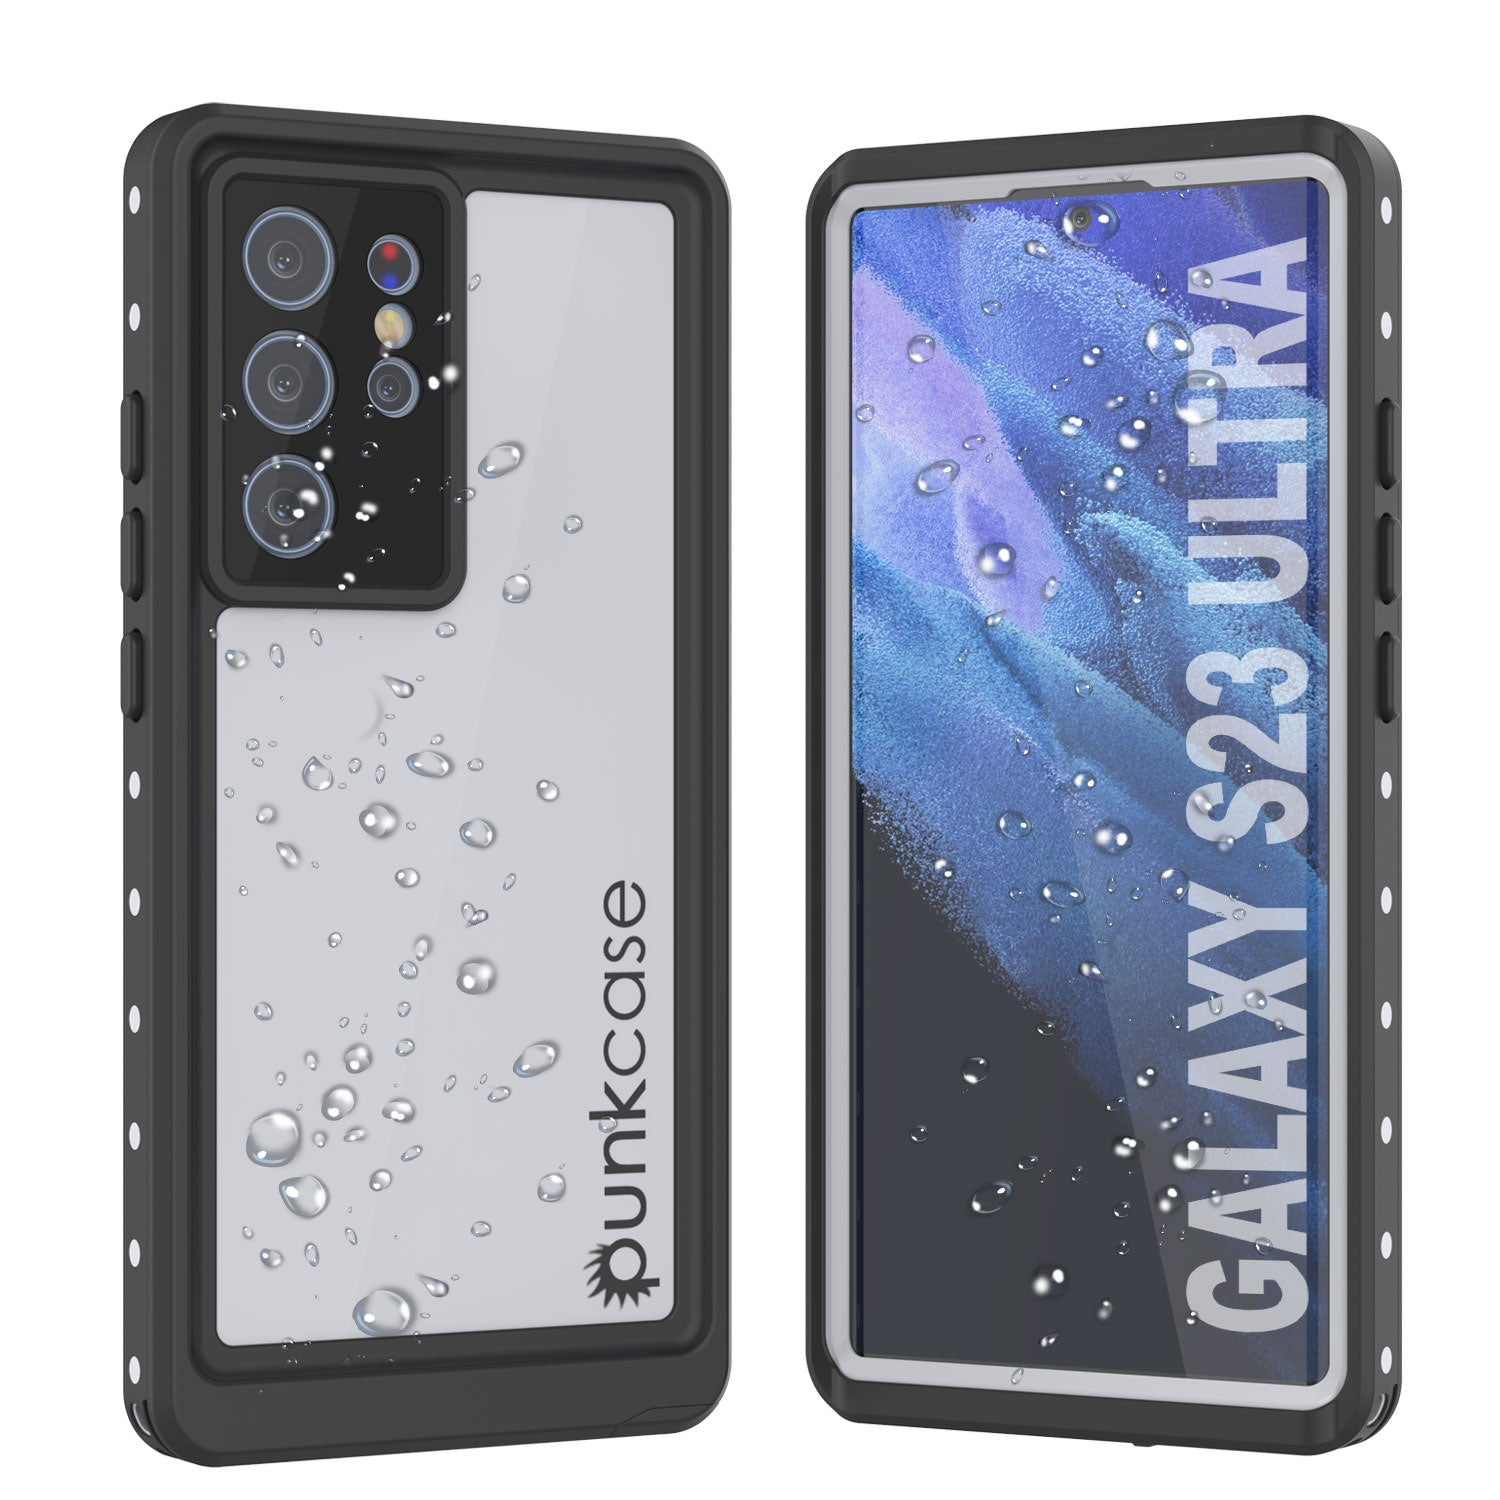 Galaxy S23 Ultra Waterproof Case, Punkcase StudStar White Thin 6.6ft Underwater IP68 Shock/Snow Proof